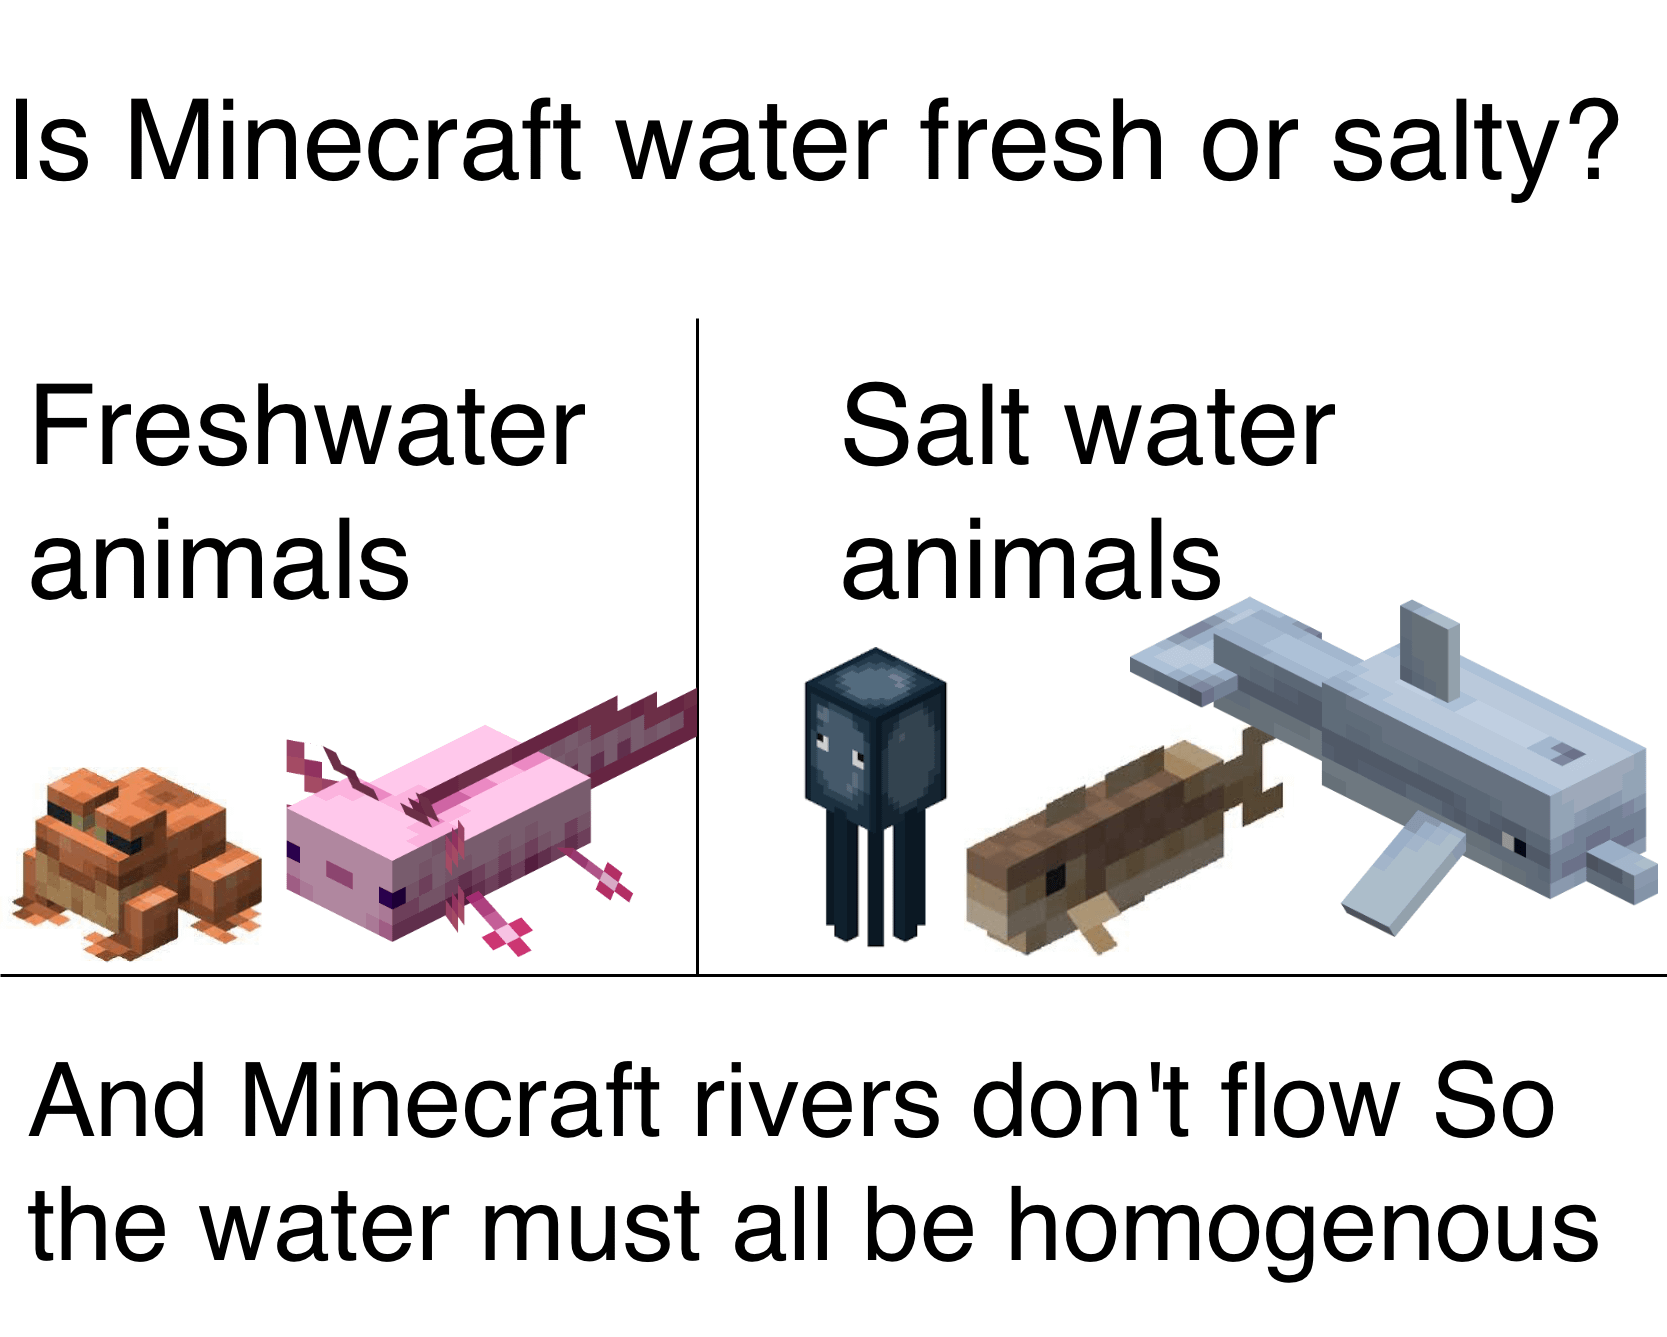 Minecraft Memes - "Is Minecraft water salty or fresh?"